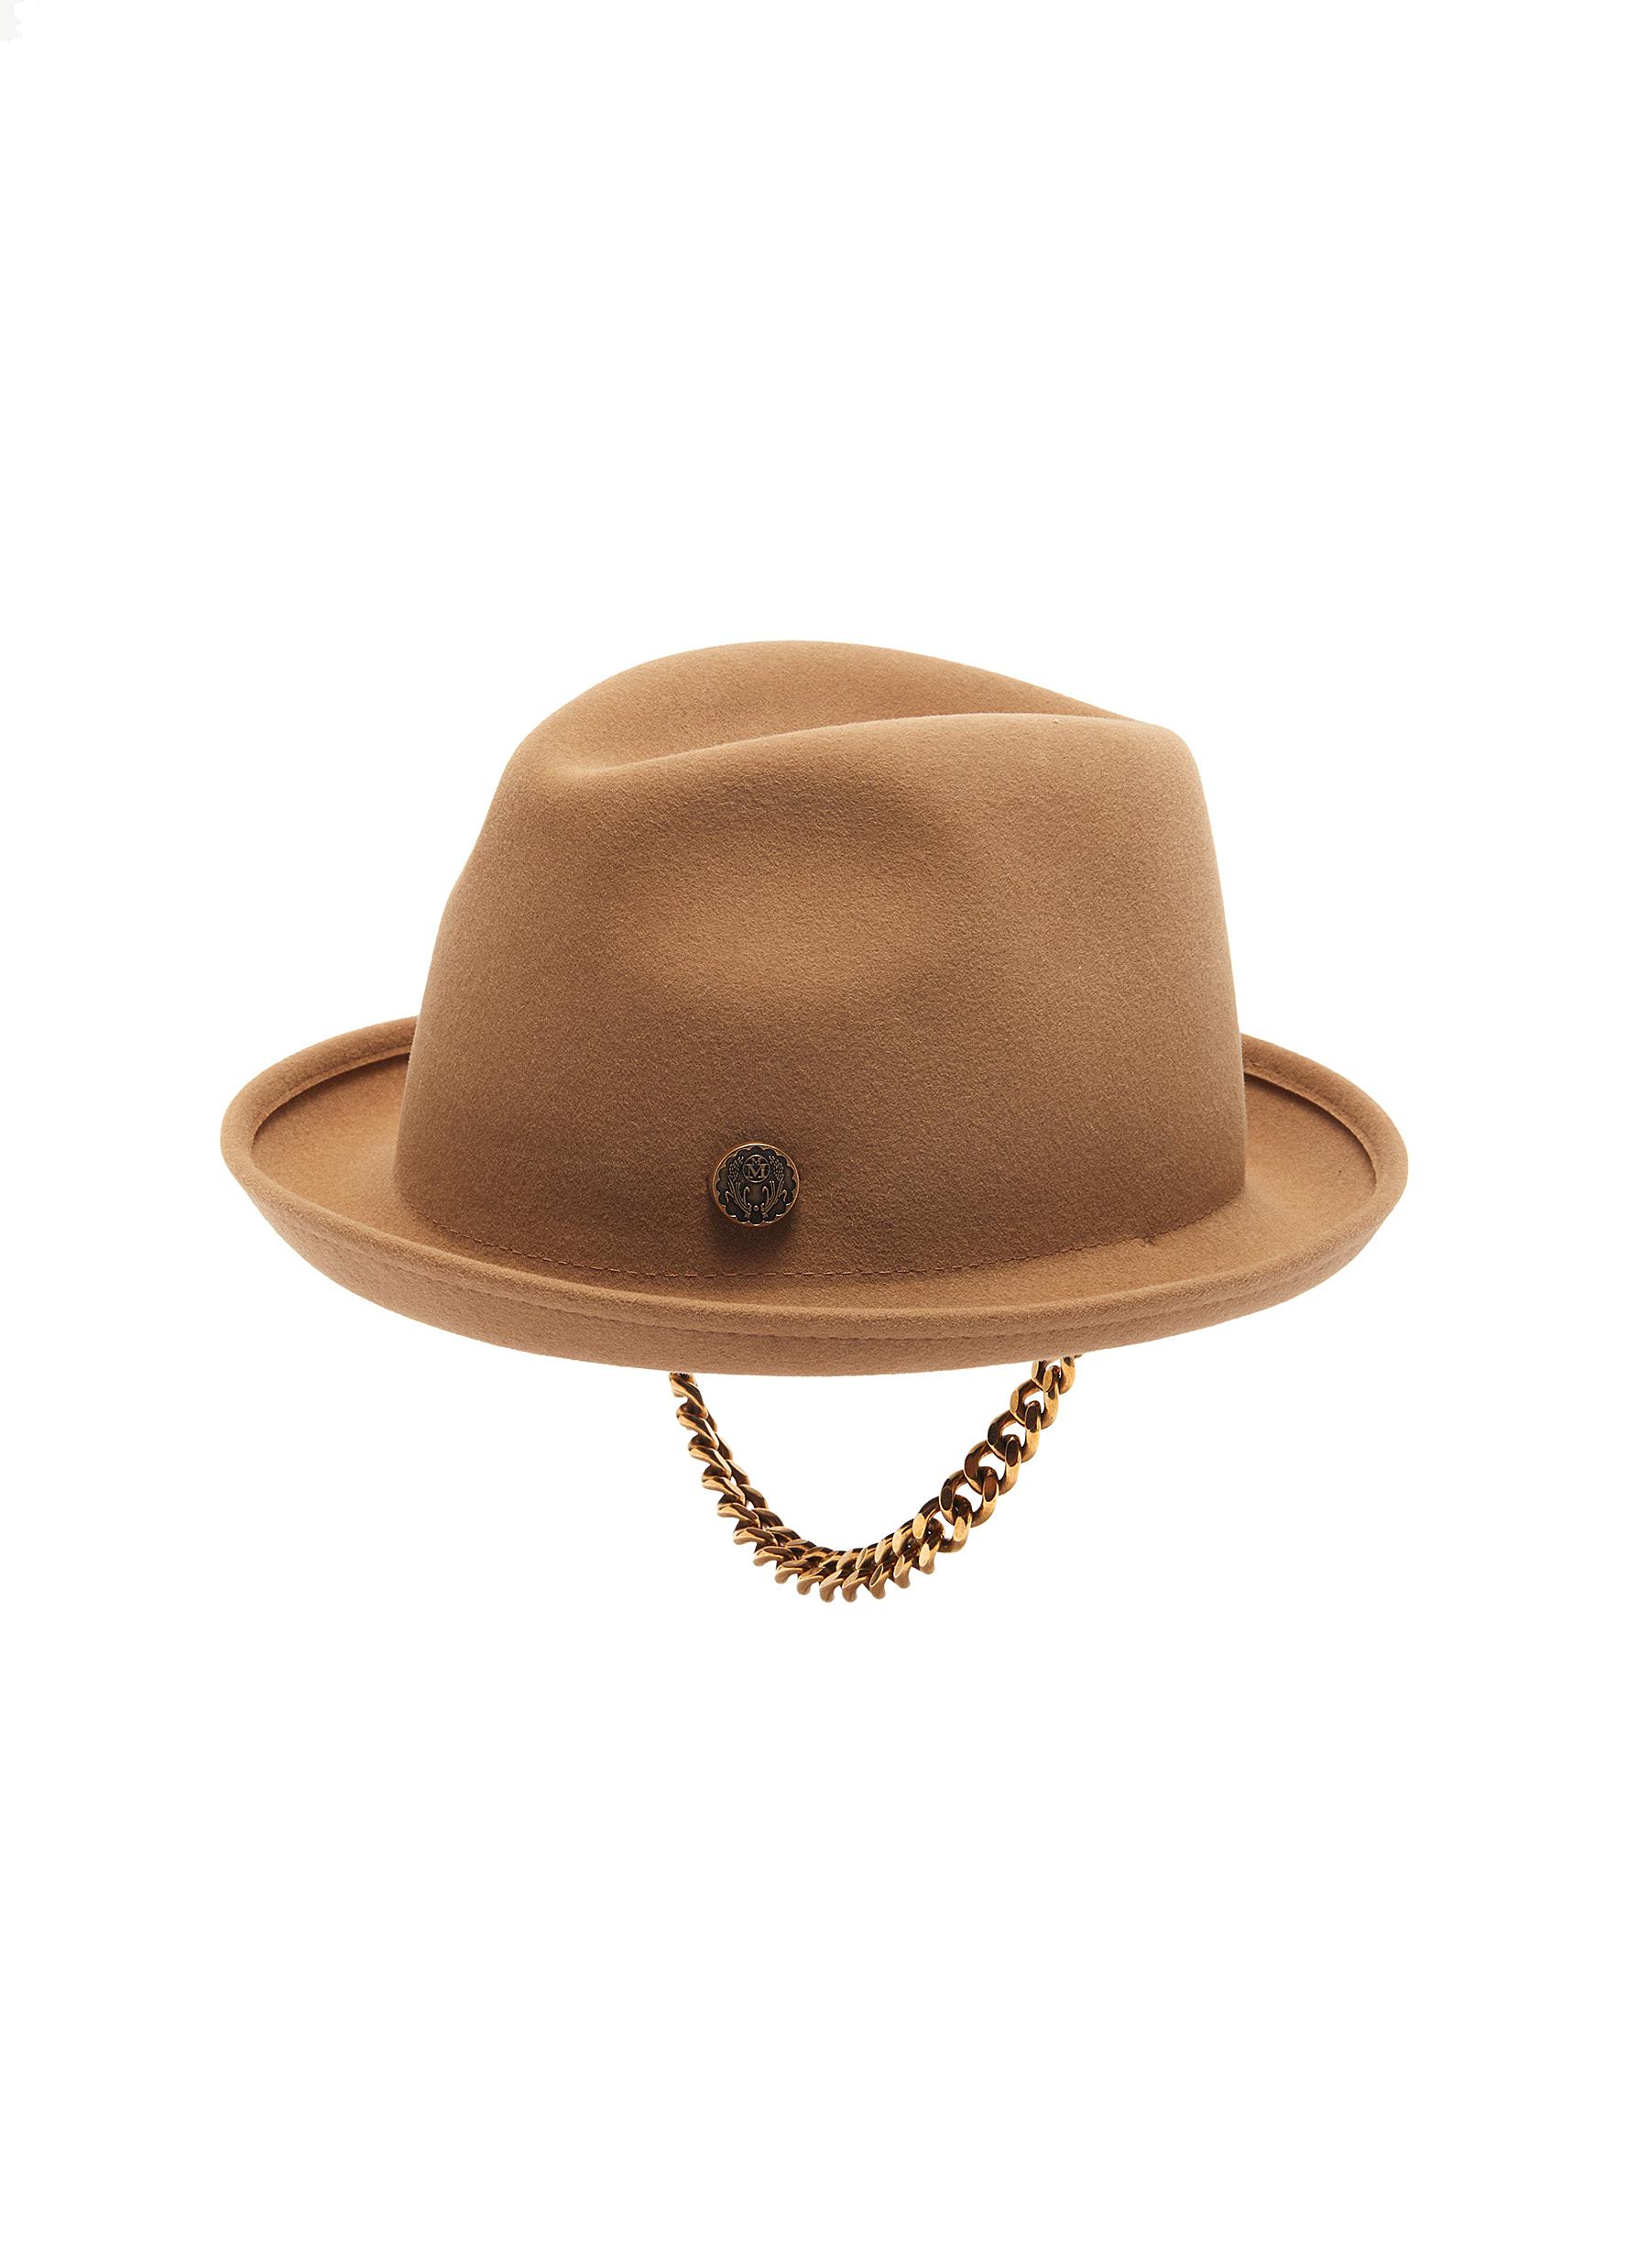 Maison Michel 'ygor' Signet Ring Felt Hat